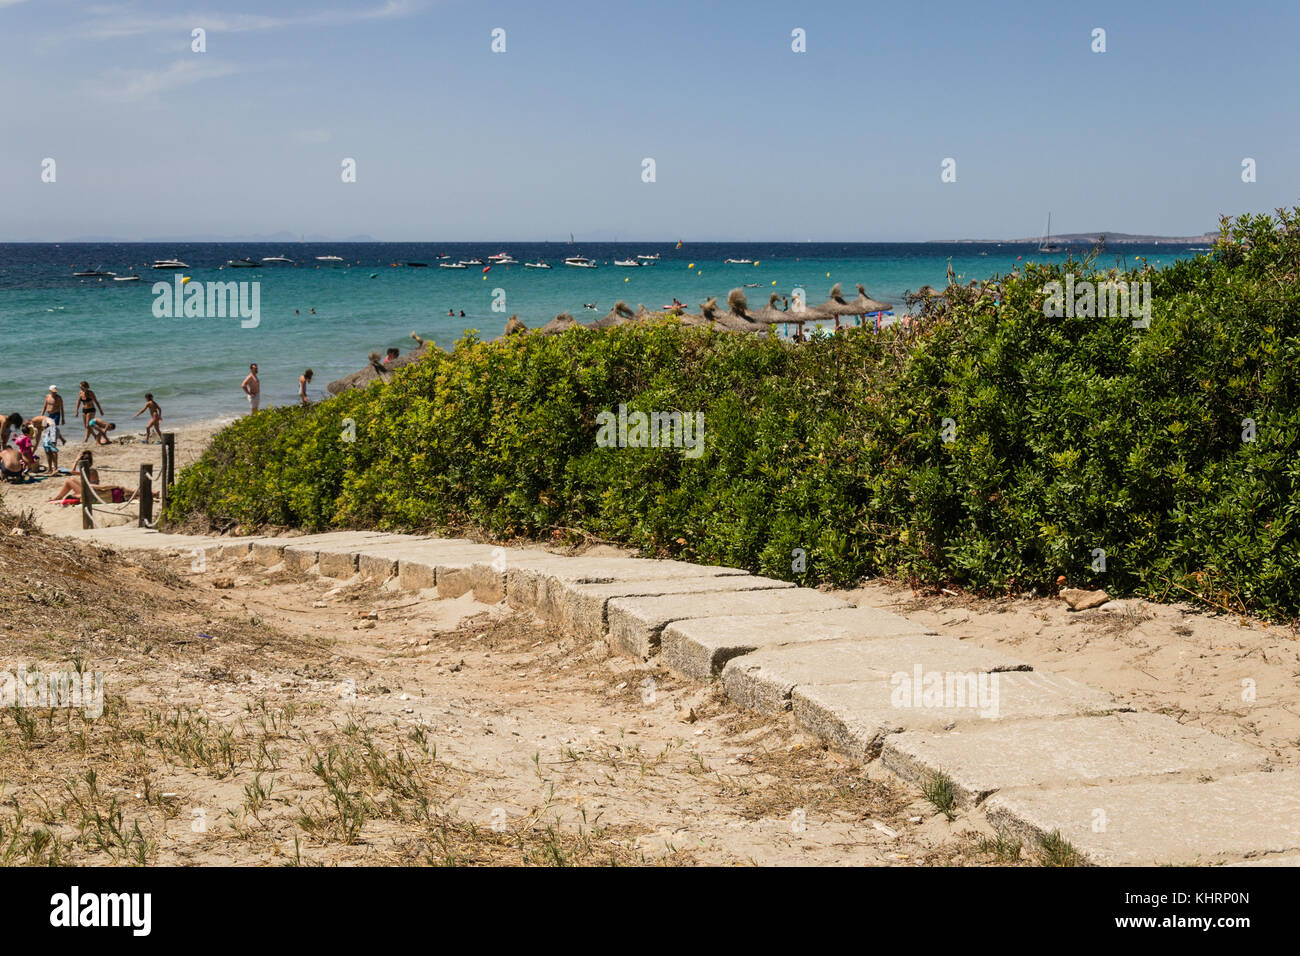 Gangway on the beach of Sant Tomas - Menorca - Spain Stock Photo